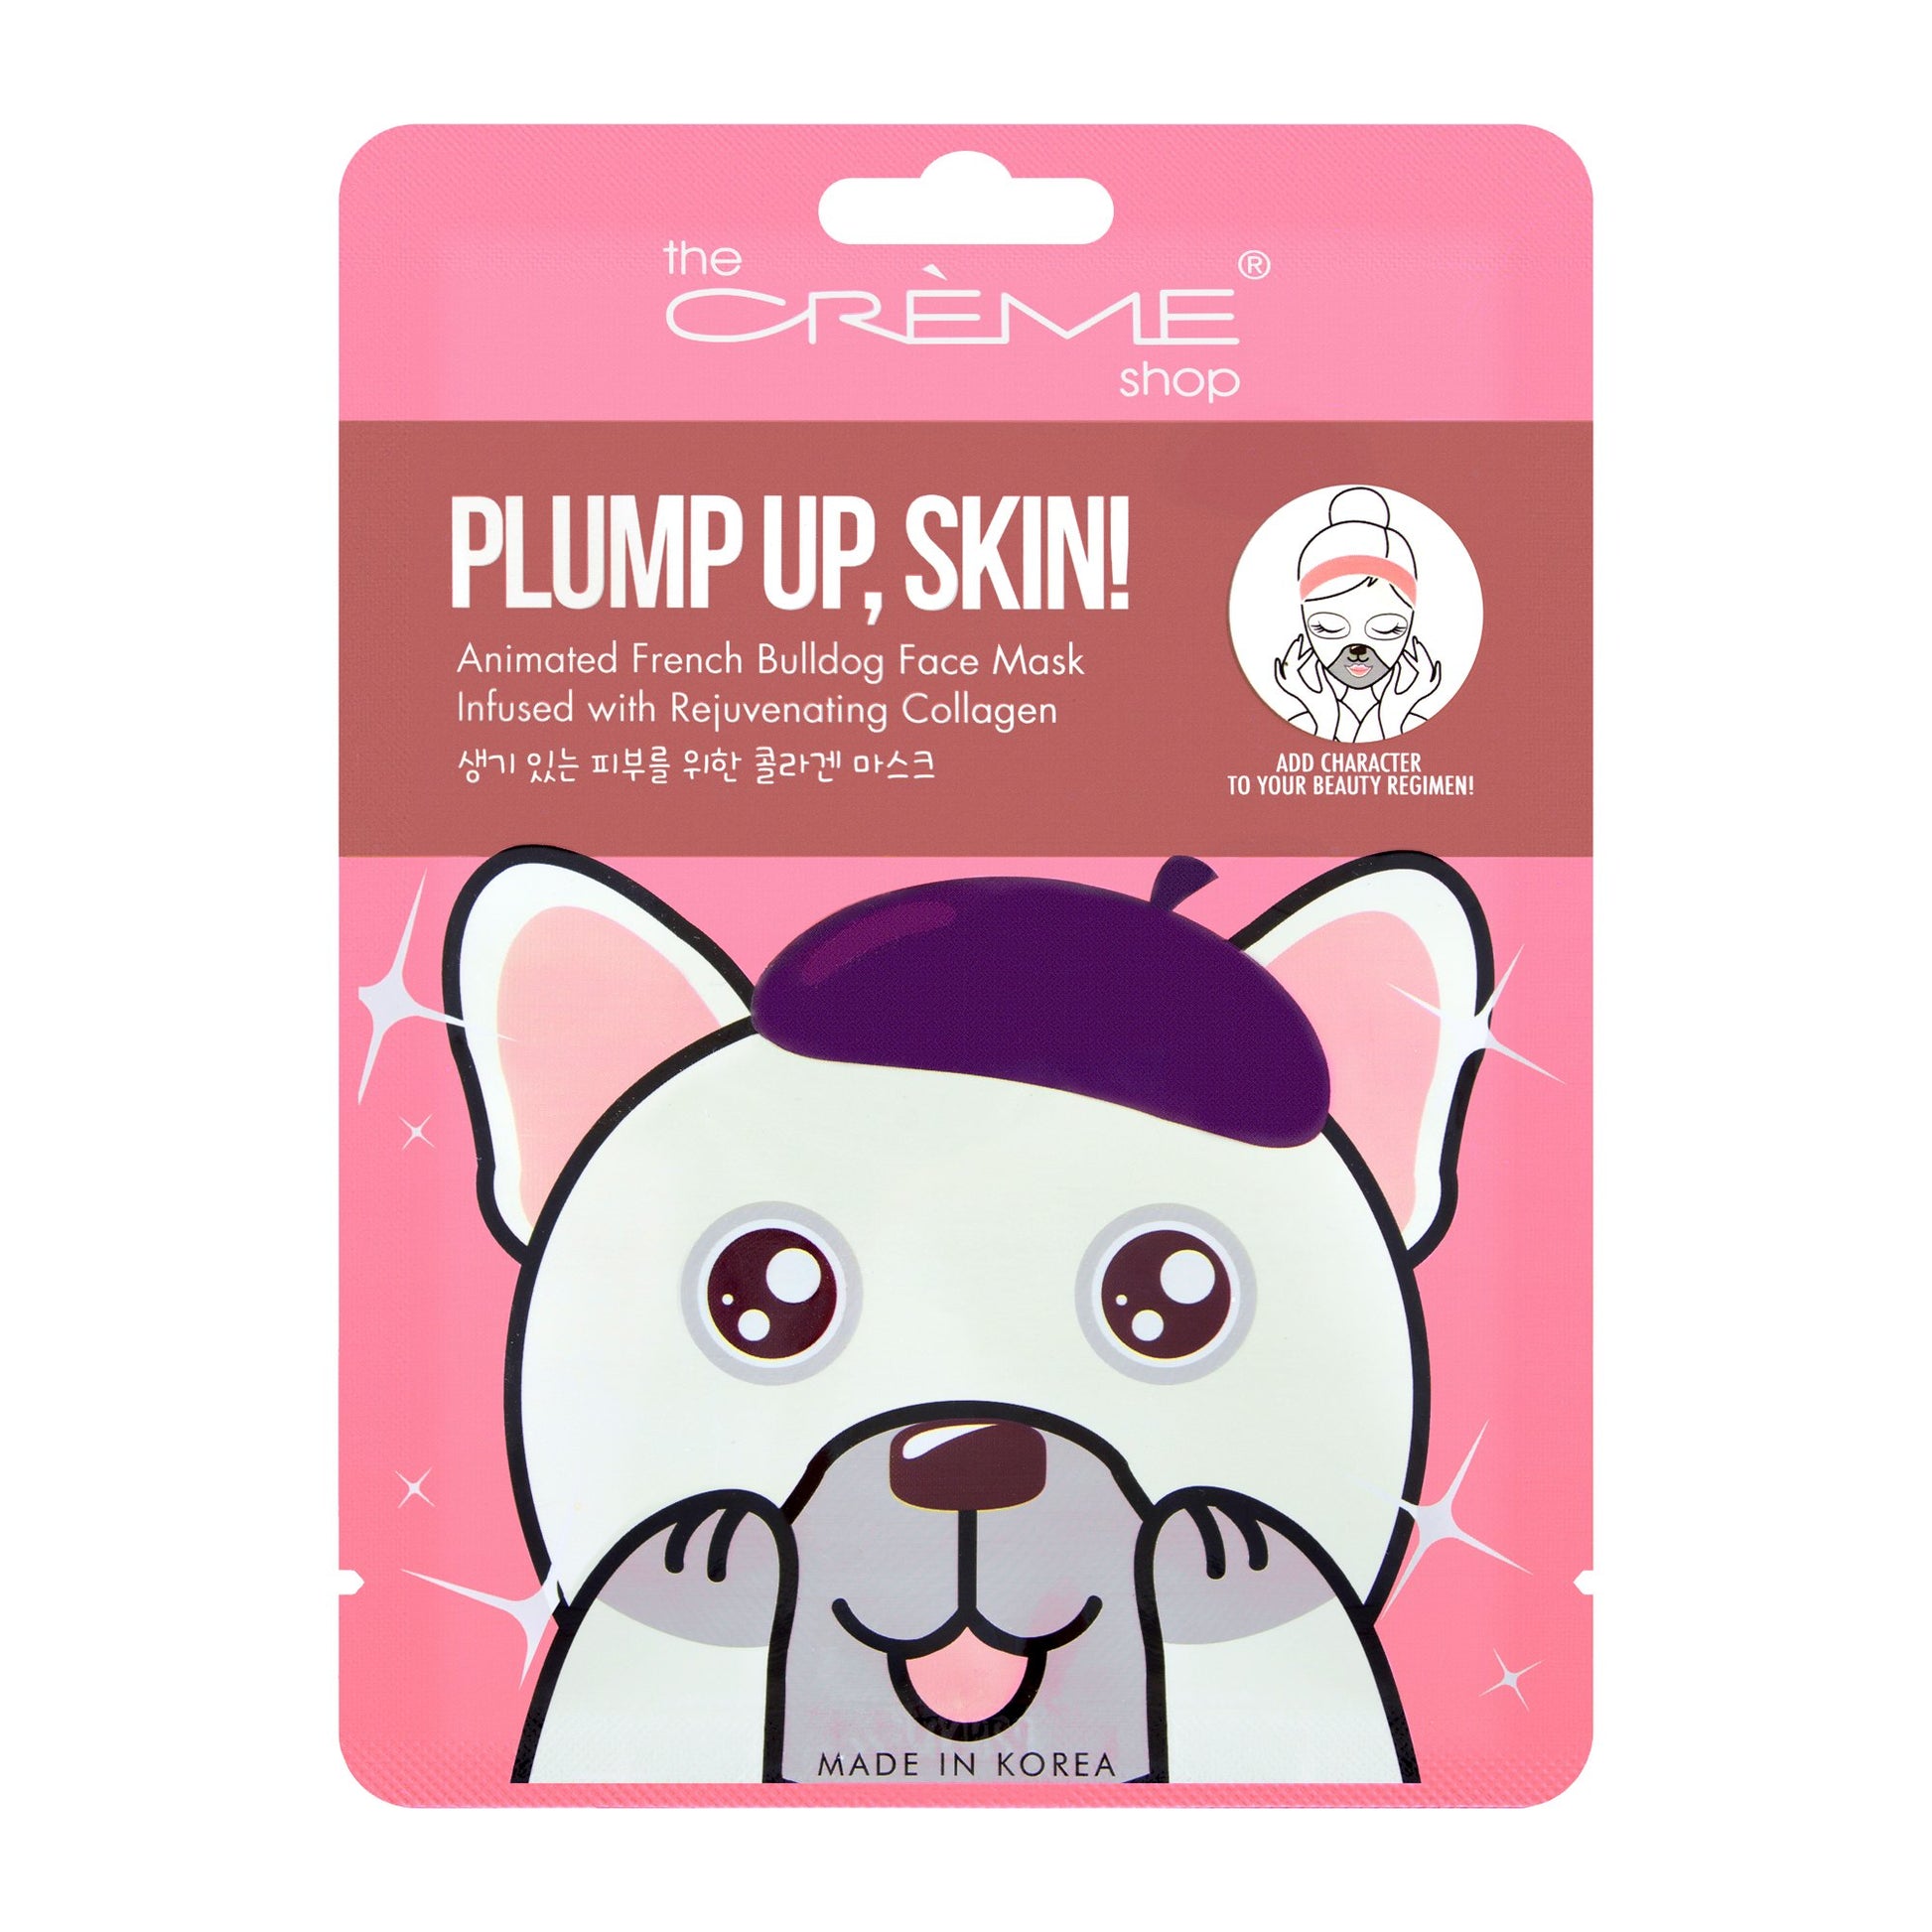 Plump Up, Skin! Animated French Bulldog Mask - Rejuvenating Collagen - The Crème Shop